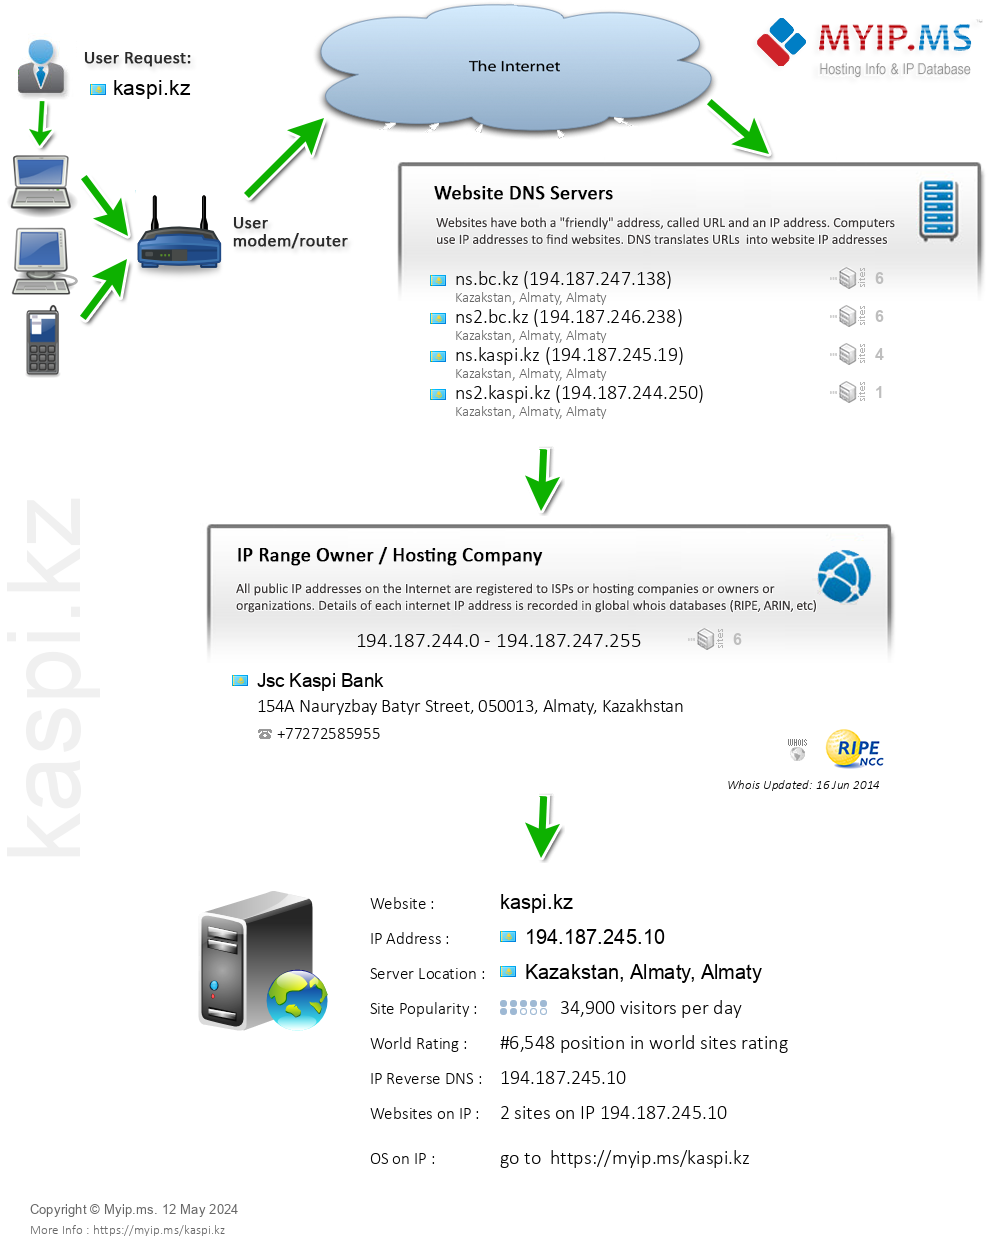 Kaspi.kz - Website Hosting Visual IP Diagram